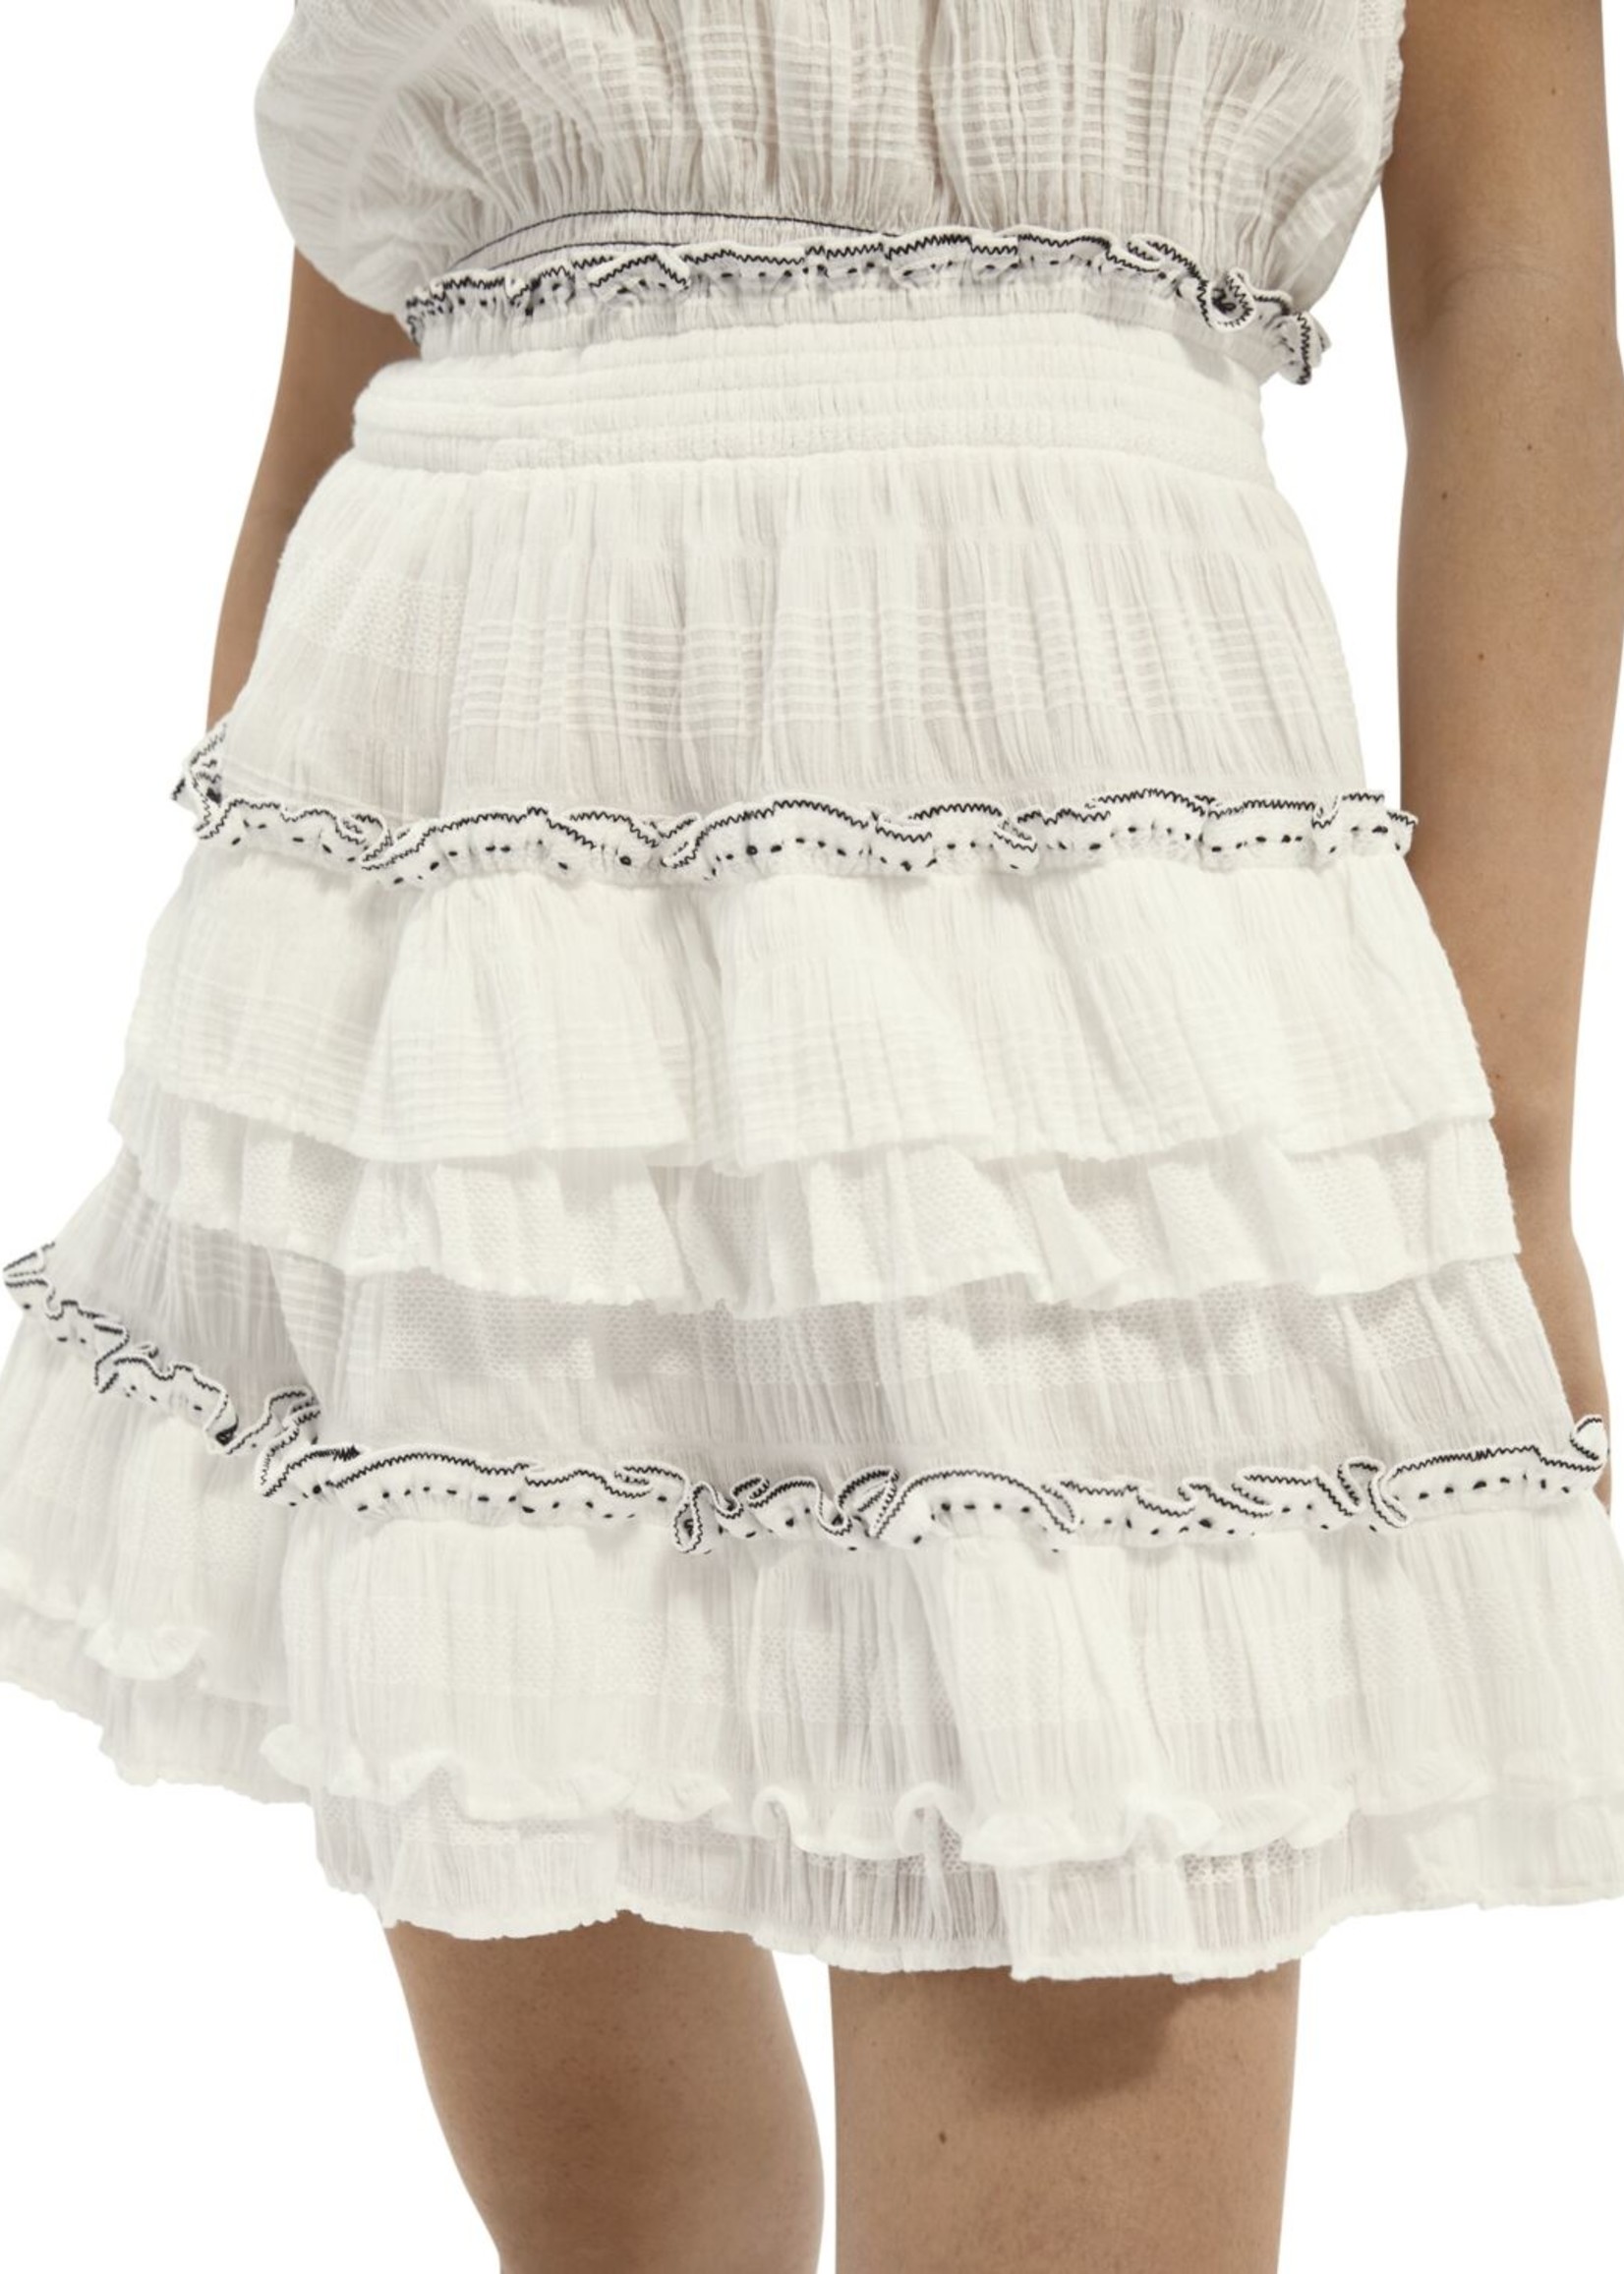 SCOTCH AND SODA Summer skirt in light weight -161620-